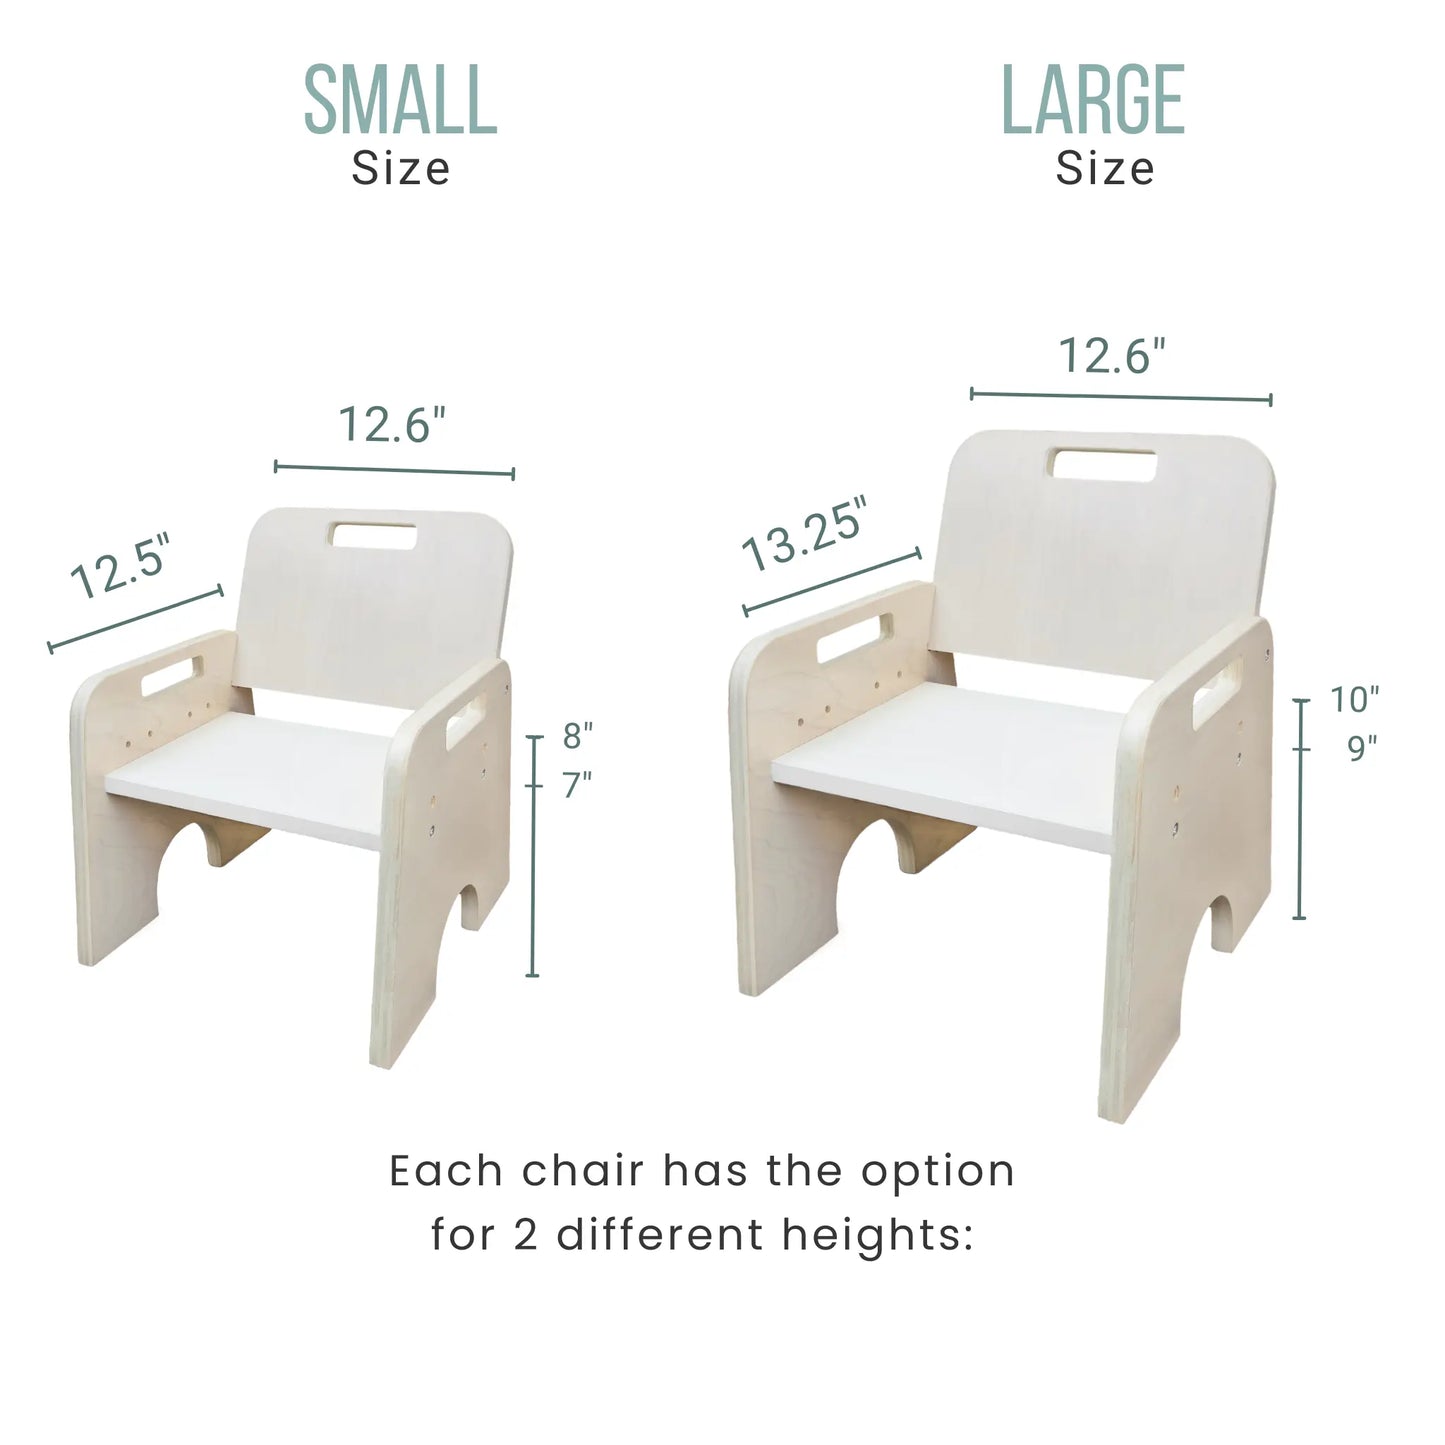 PAPAYA Chair - Adjustable Height Sapiens Child